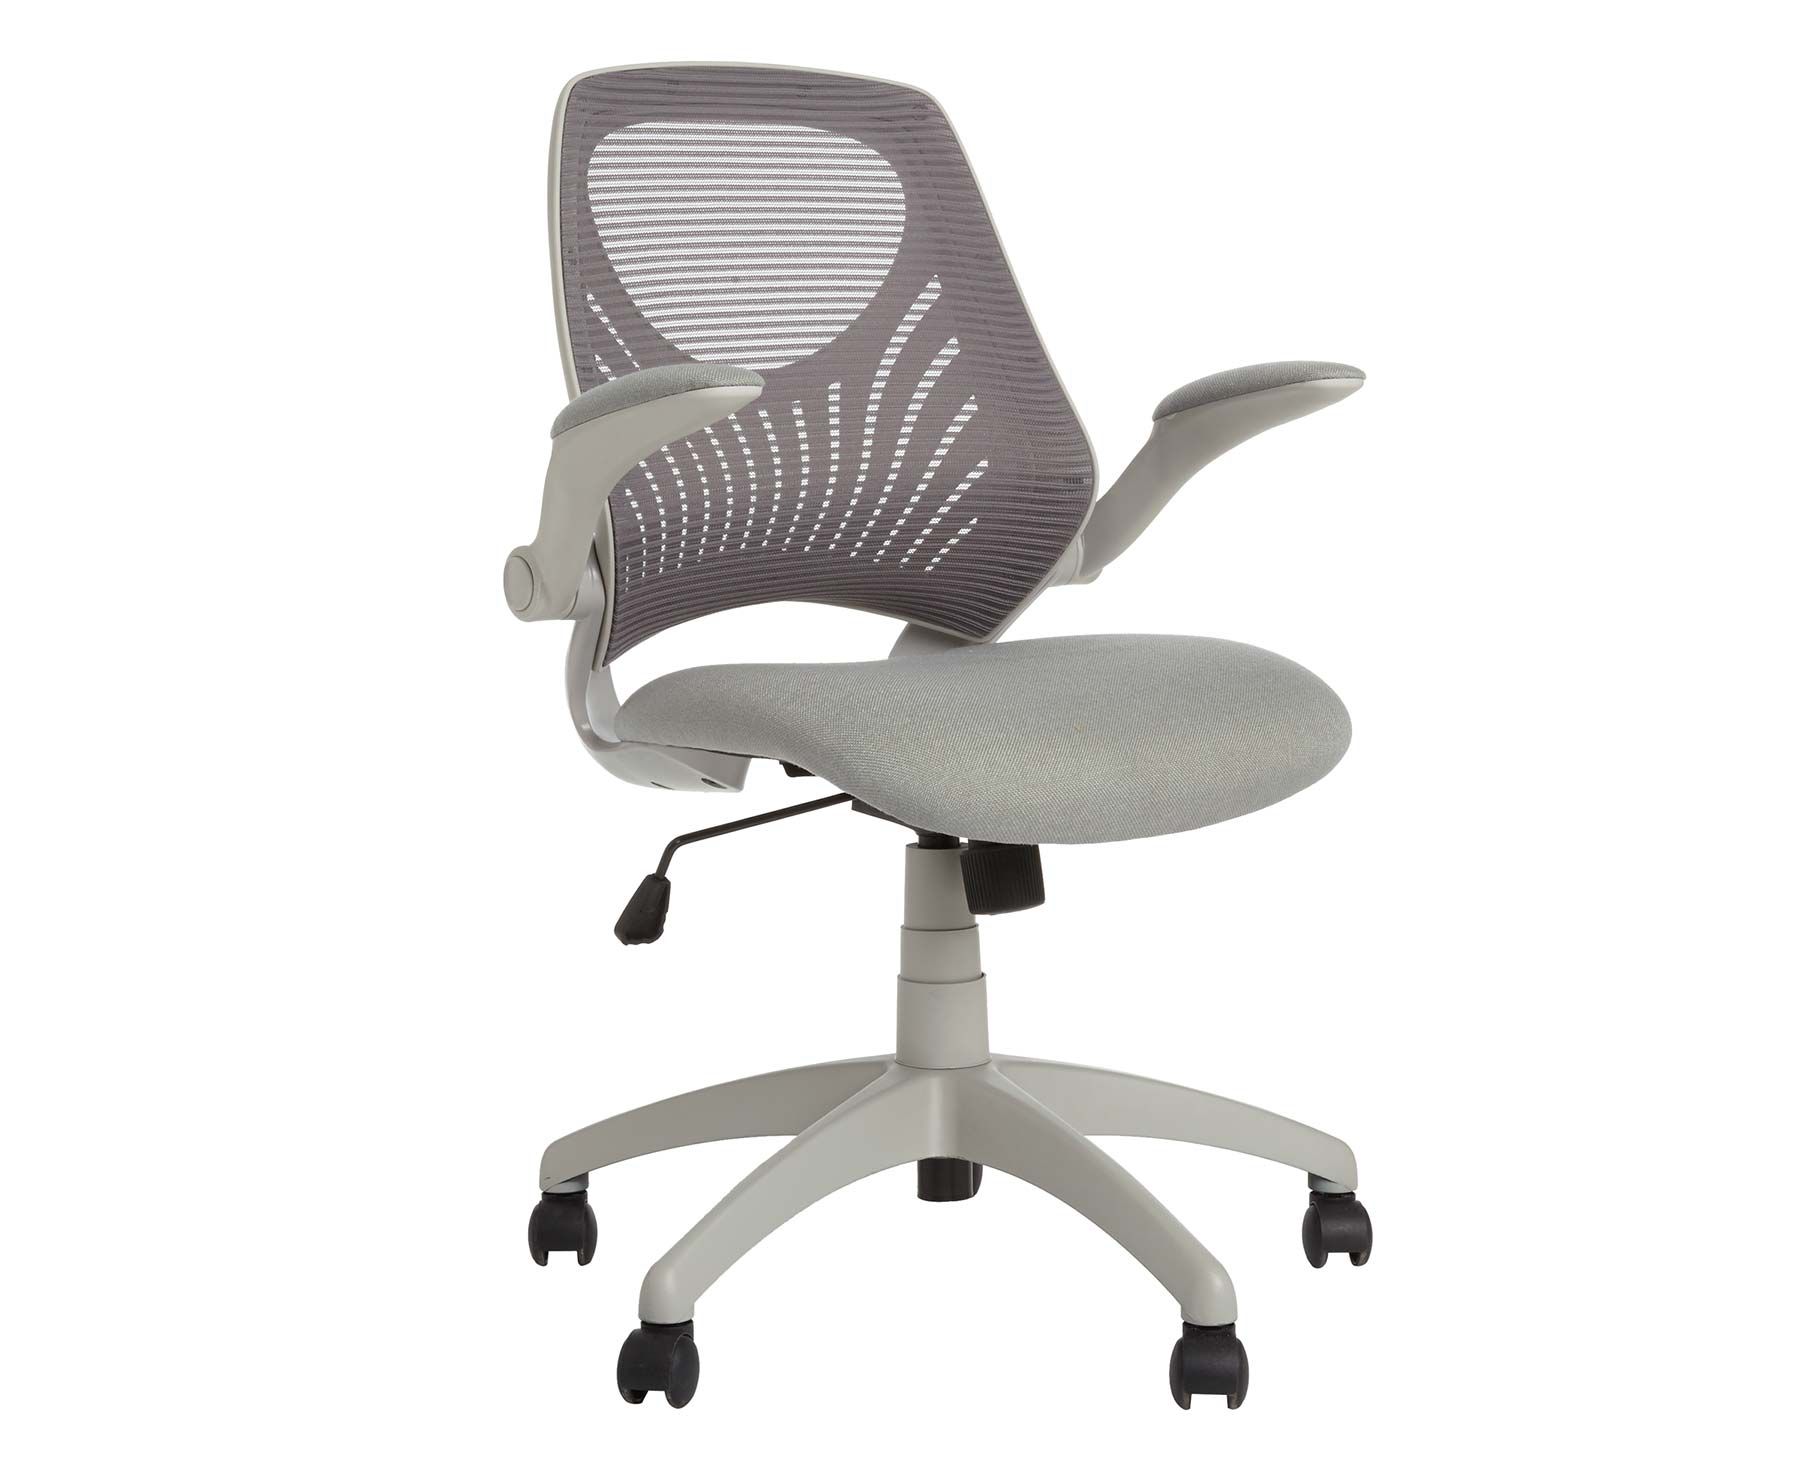 Ergonomic office chair